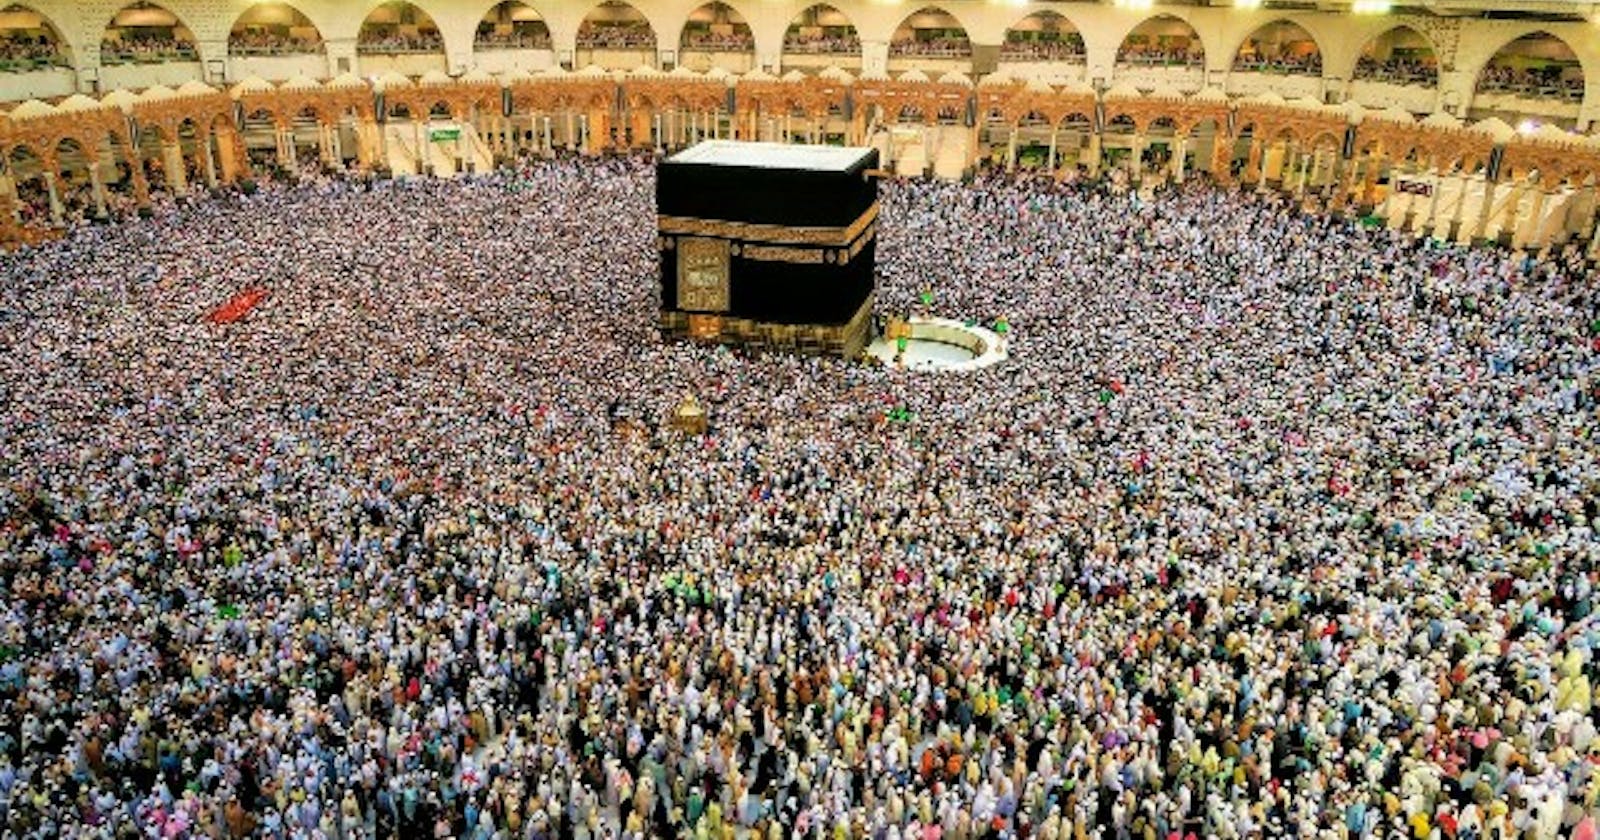 Haji yang Cepat Berangkat: Wujudkan Impian dengan Langkah Cepat